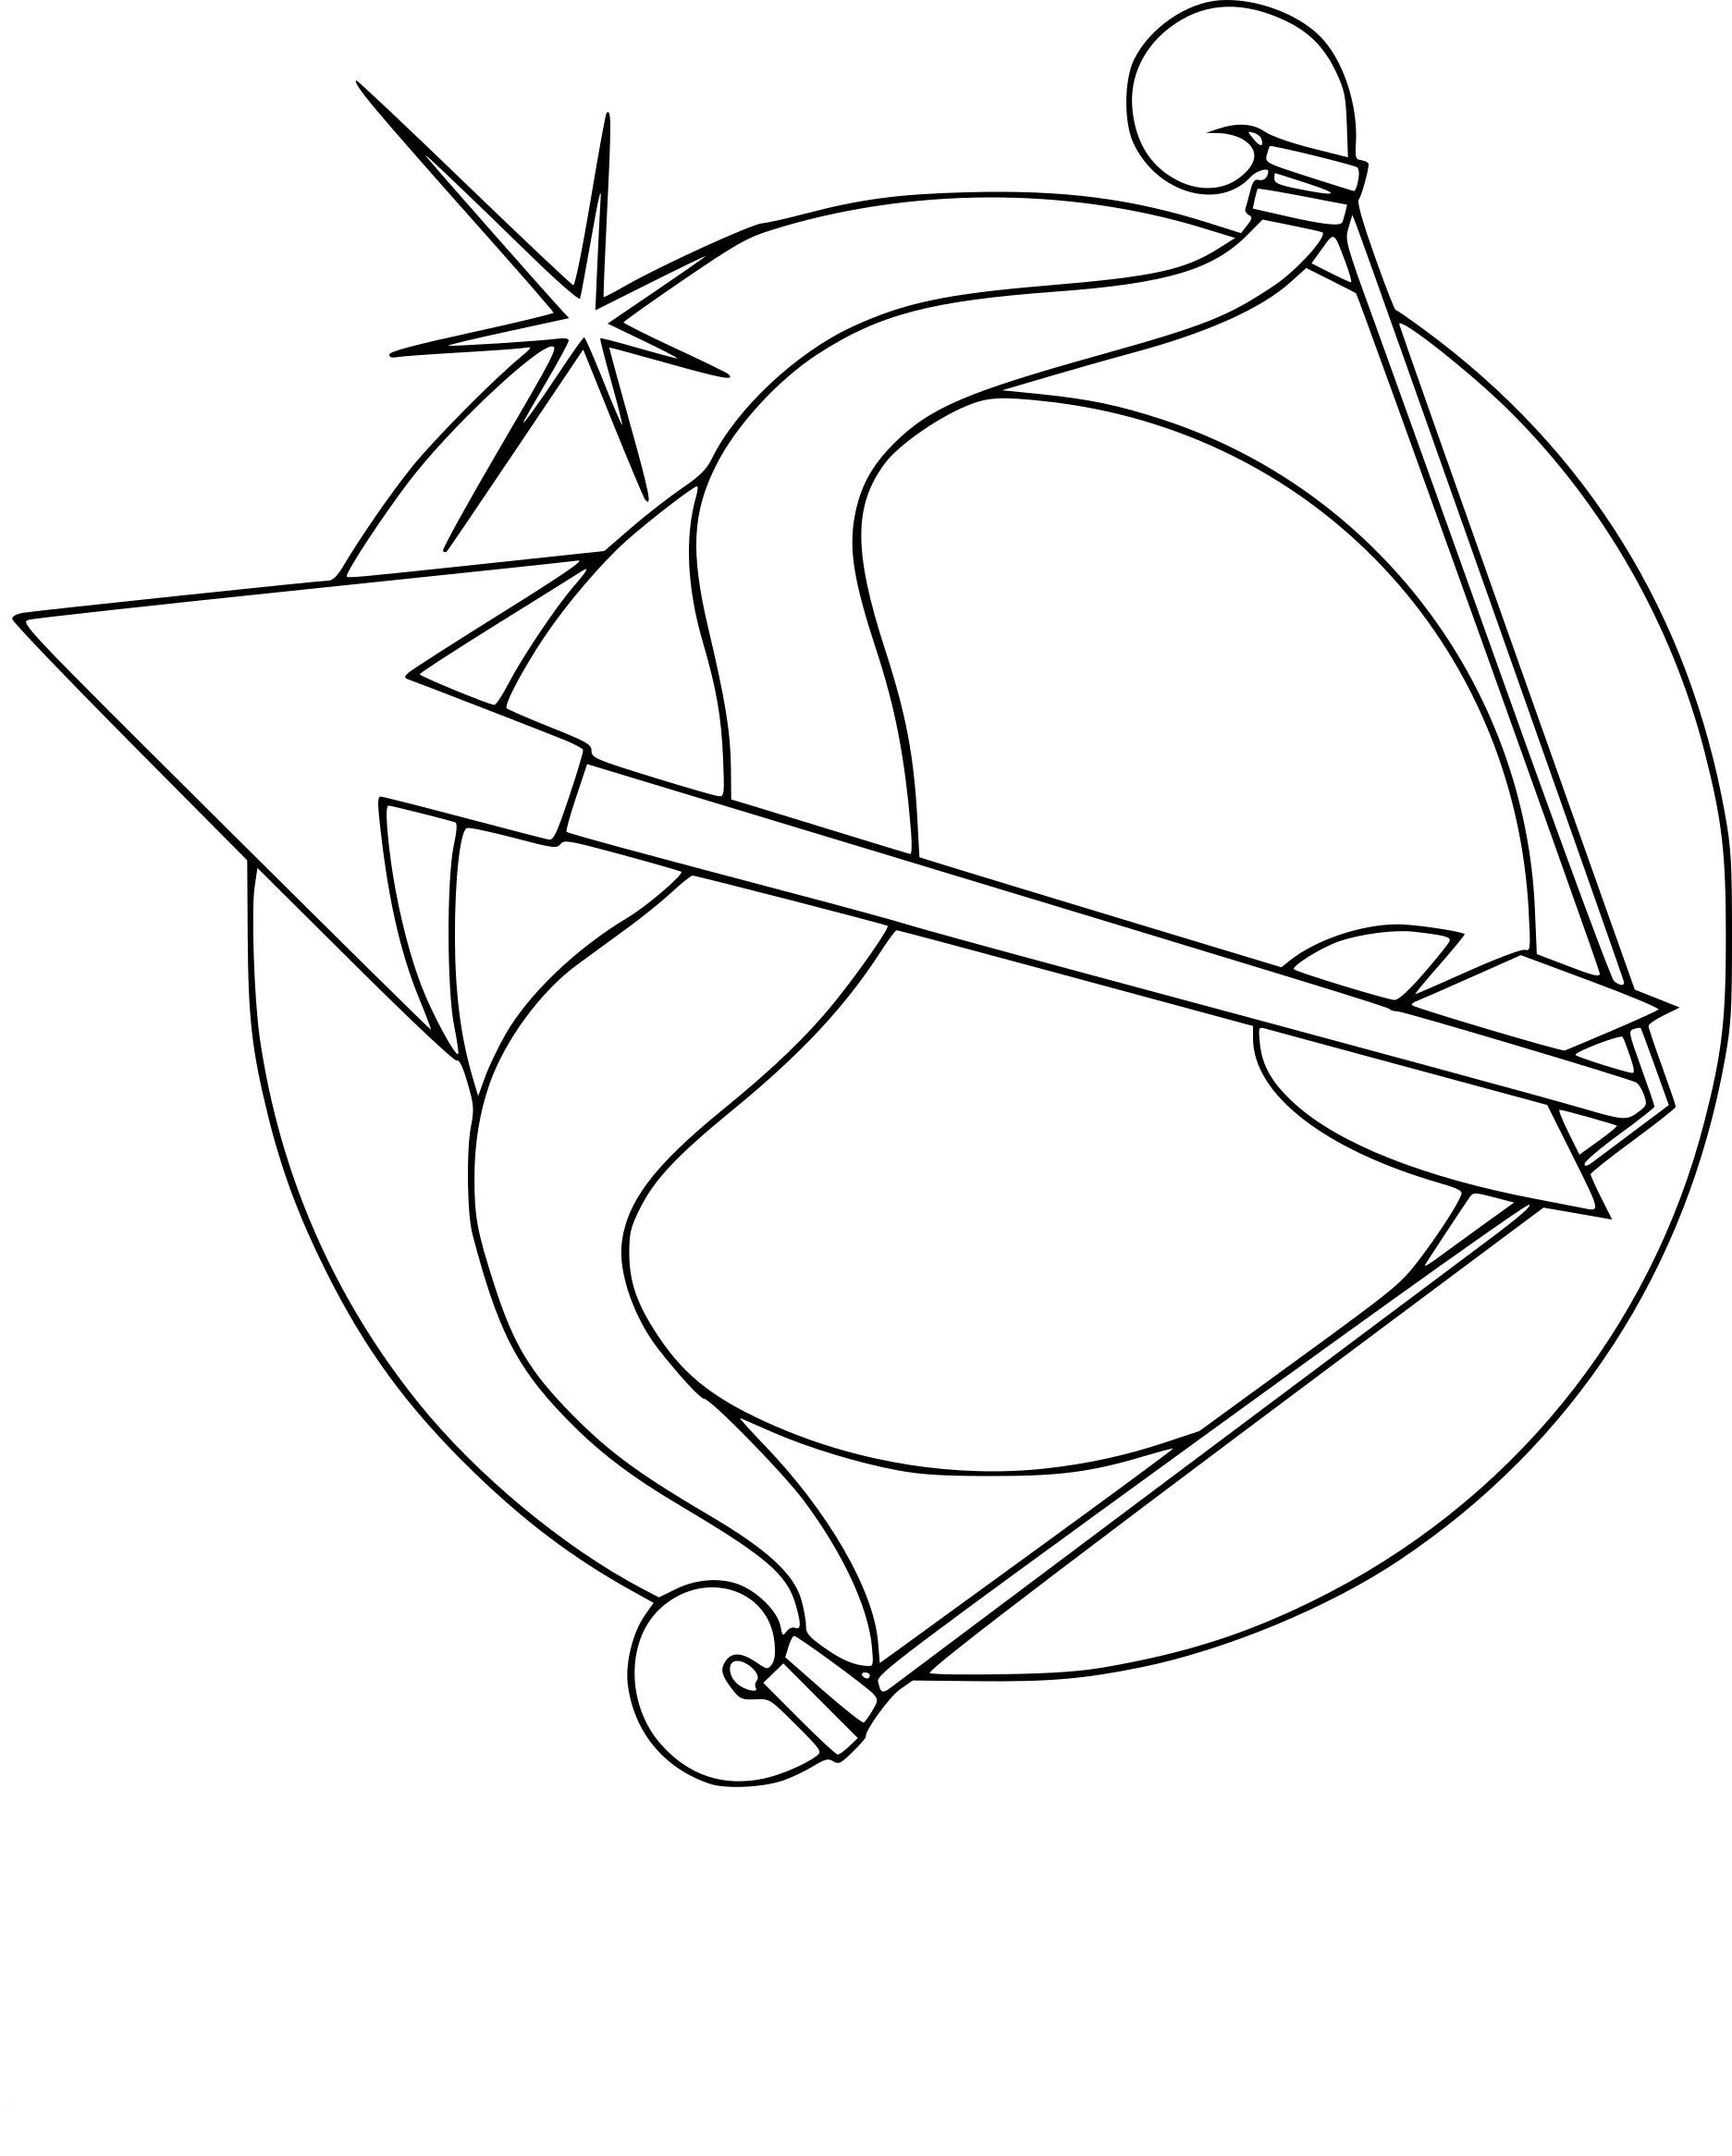 Sagittarius Sign coloring page